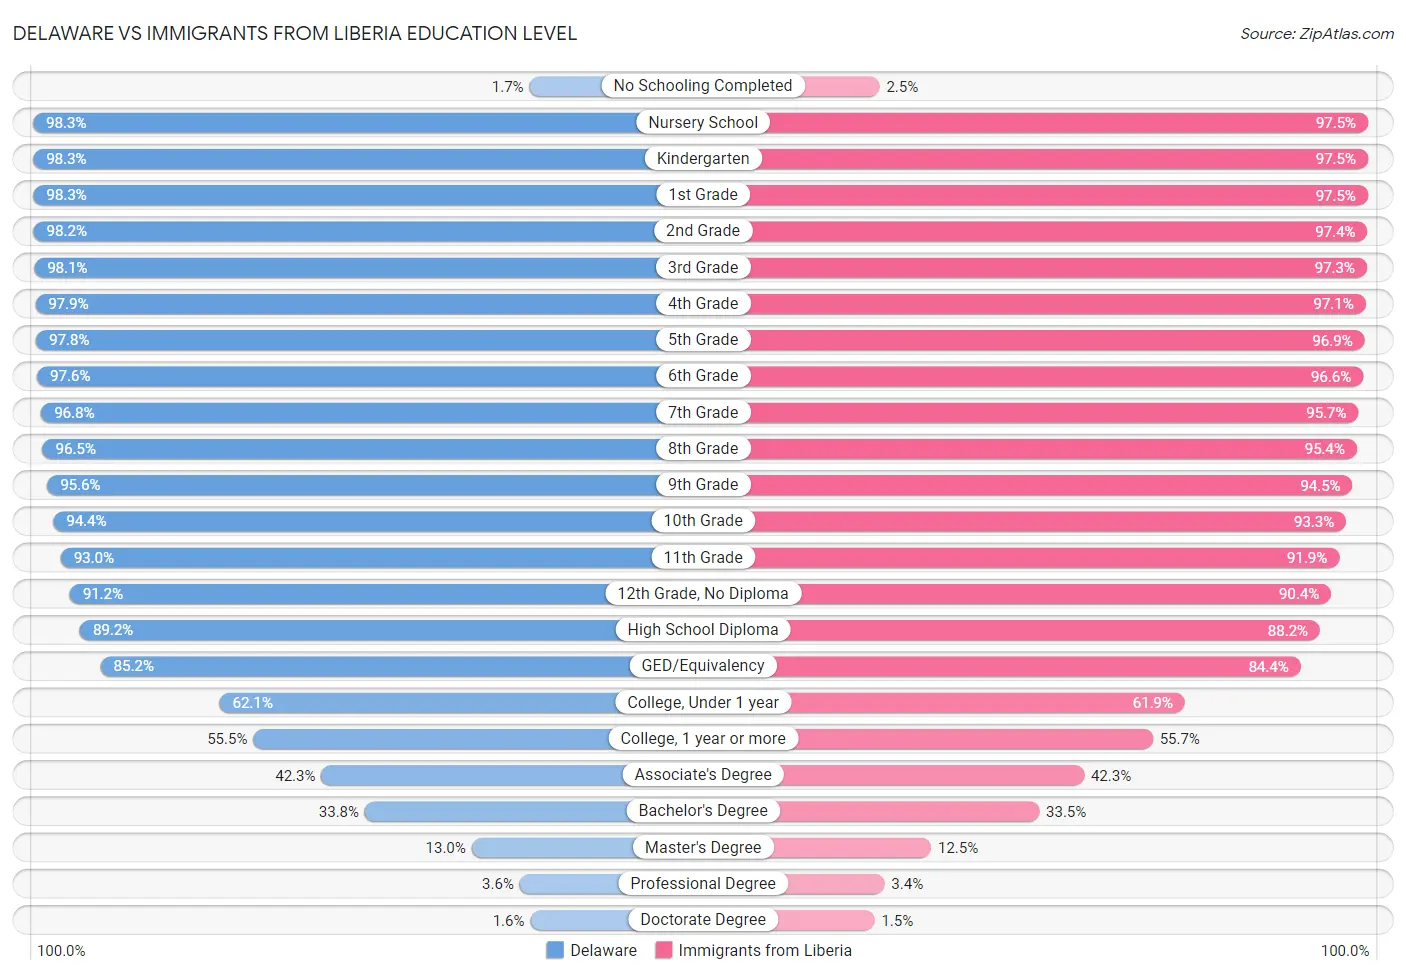 Delaware vs Immigrants from Liberia Education Level